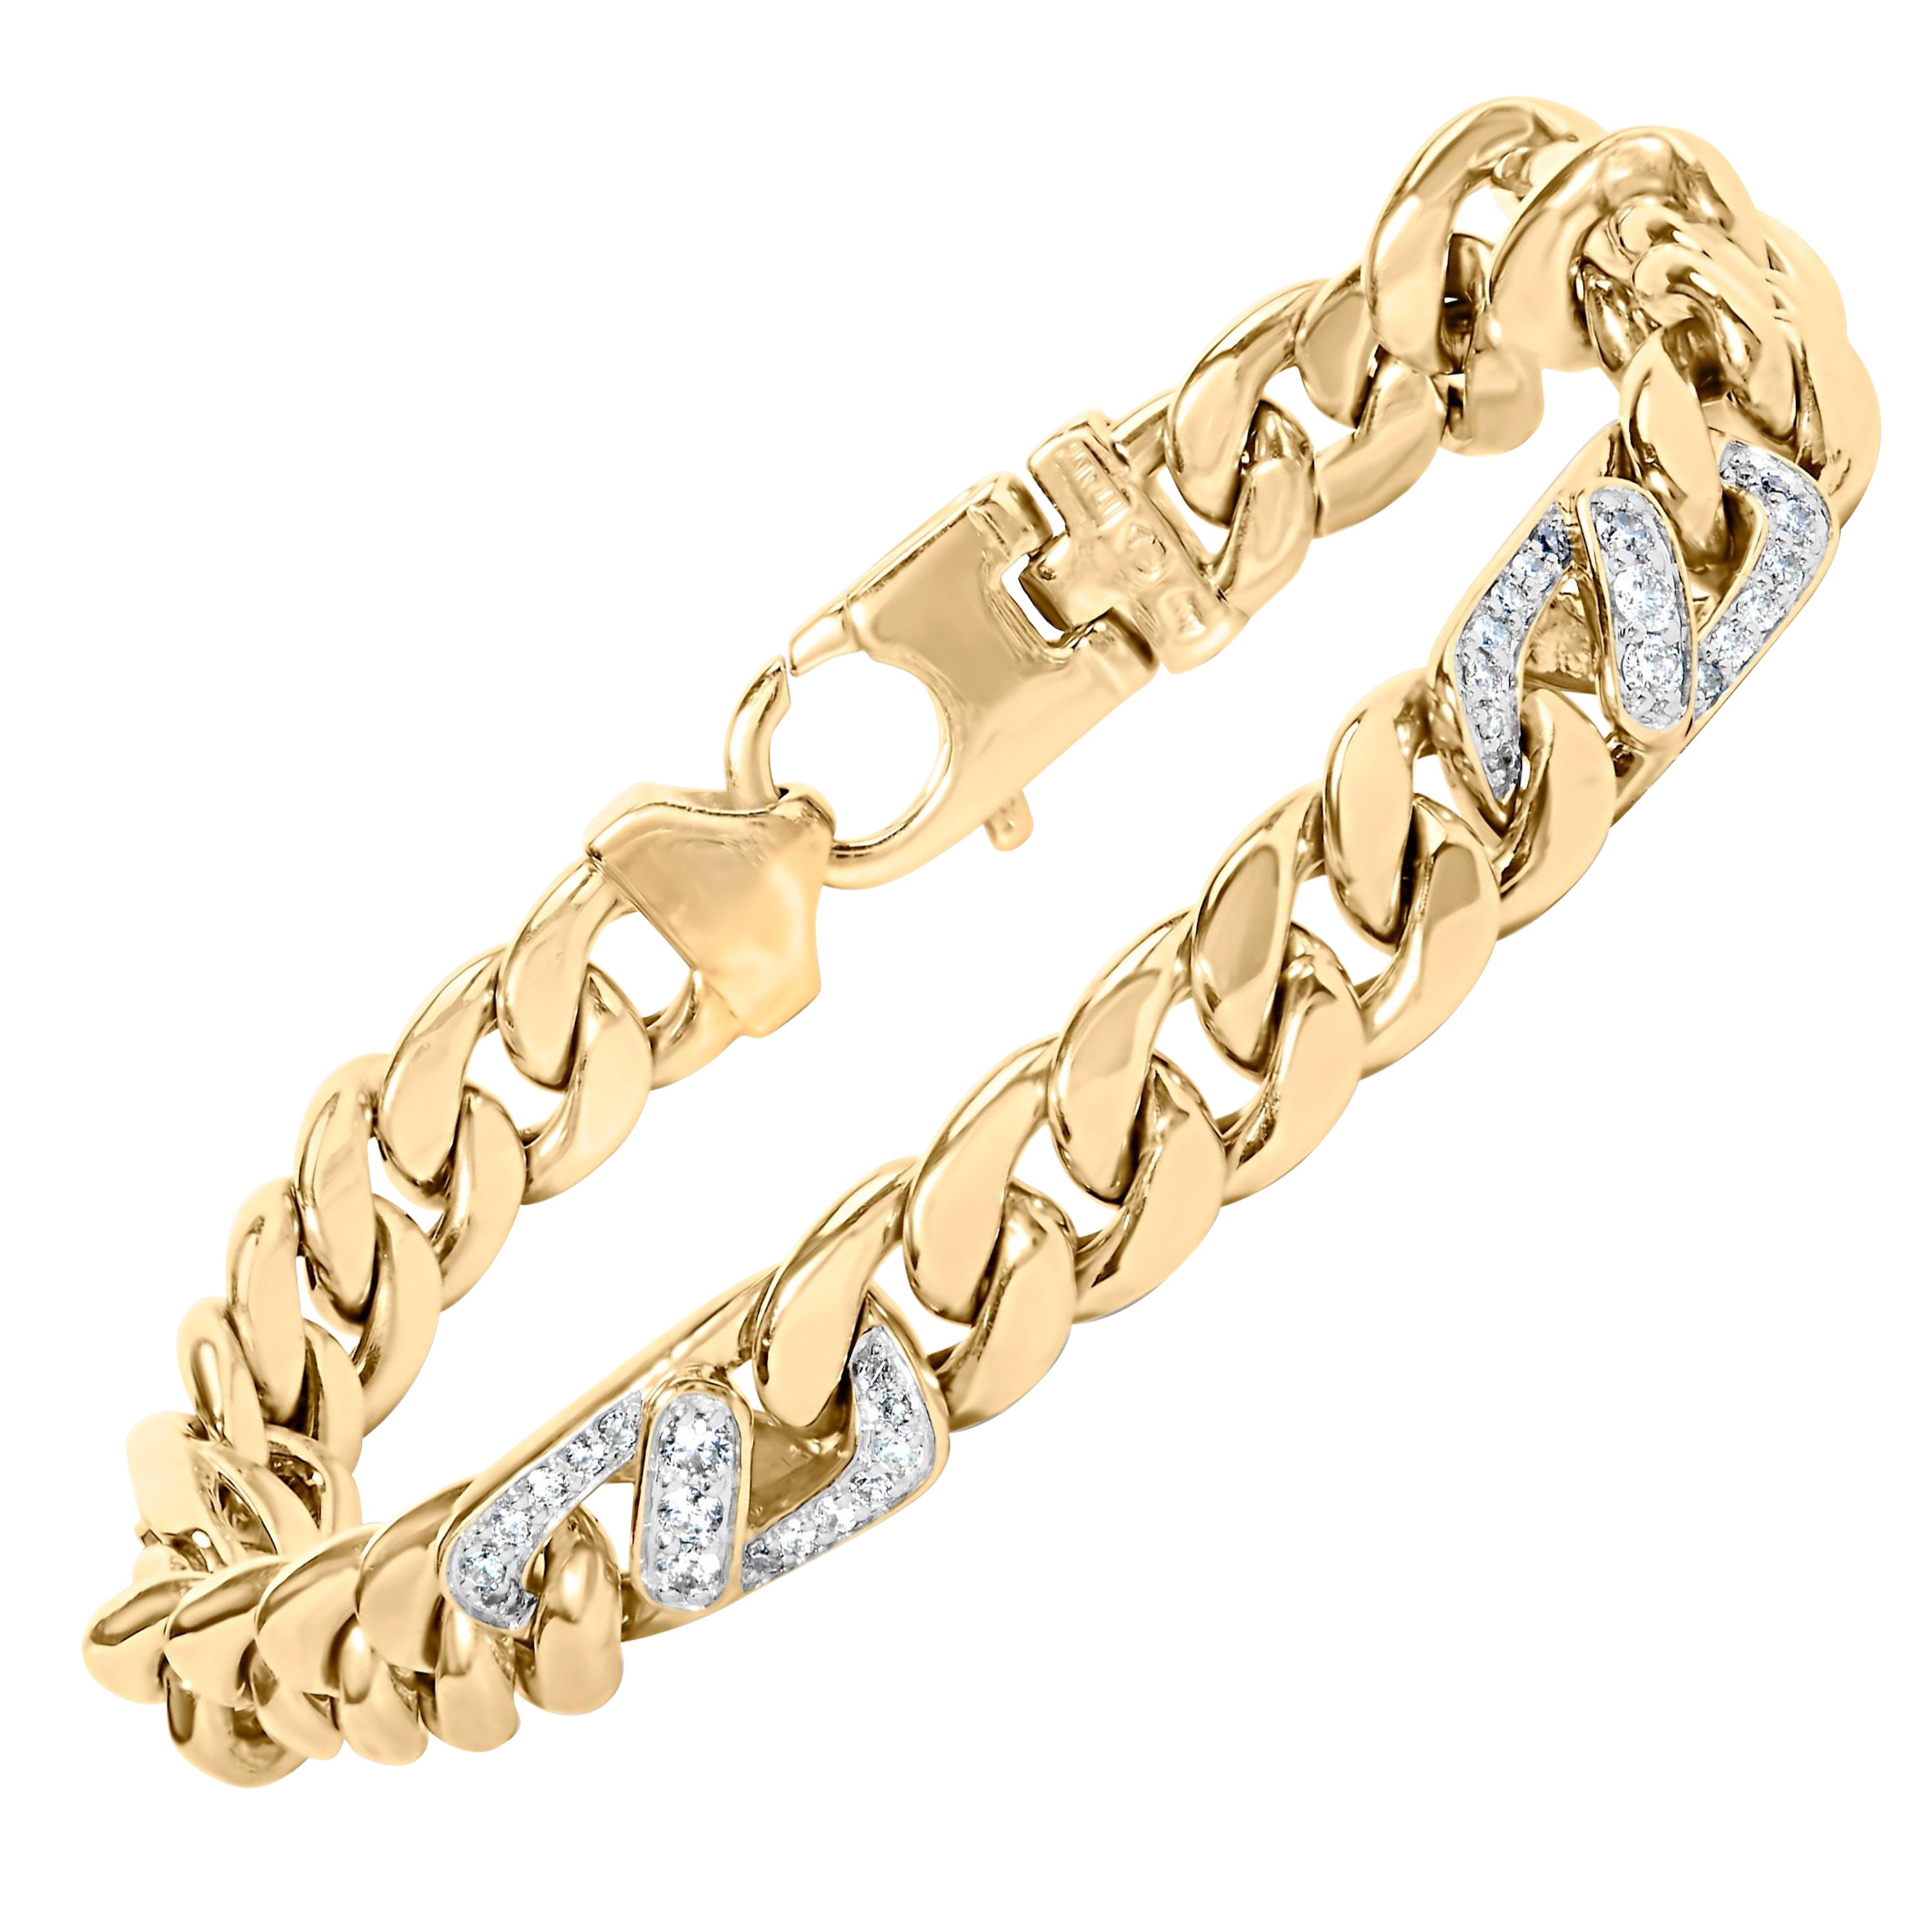 10K Yellow Gold 1.0 Carat Diamond Miami Cuban Link Men's Bracelet  - 8.5 Inches For Sale